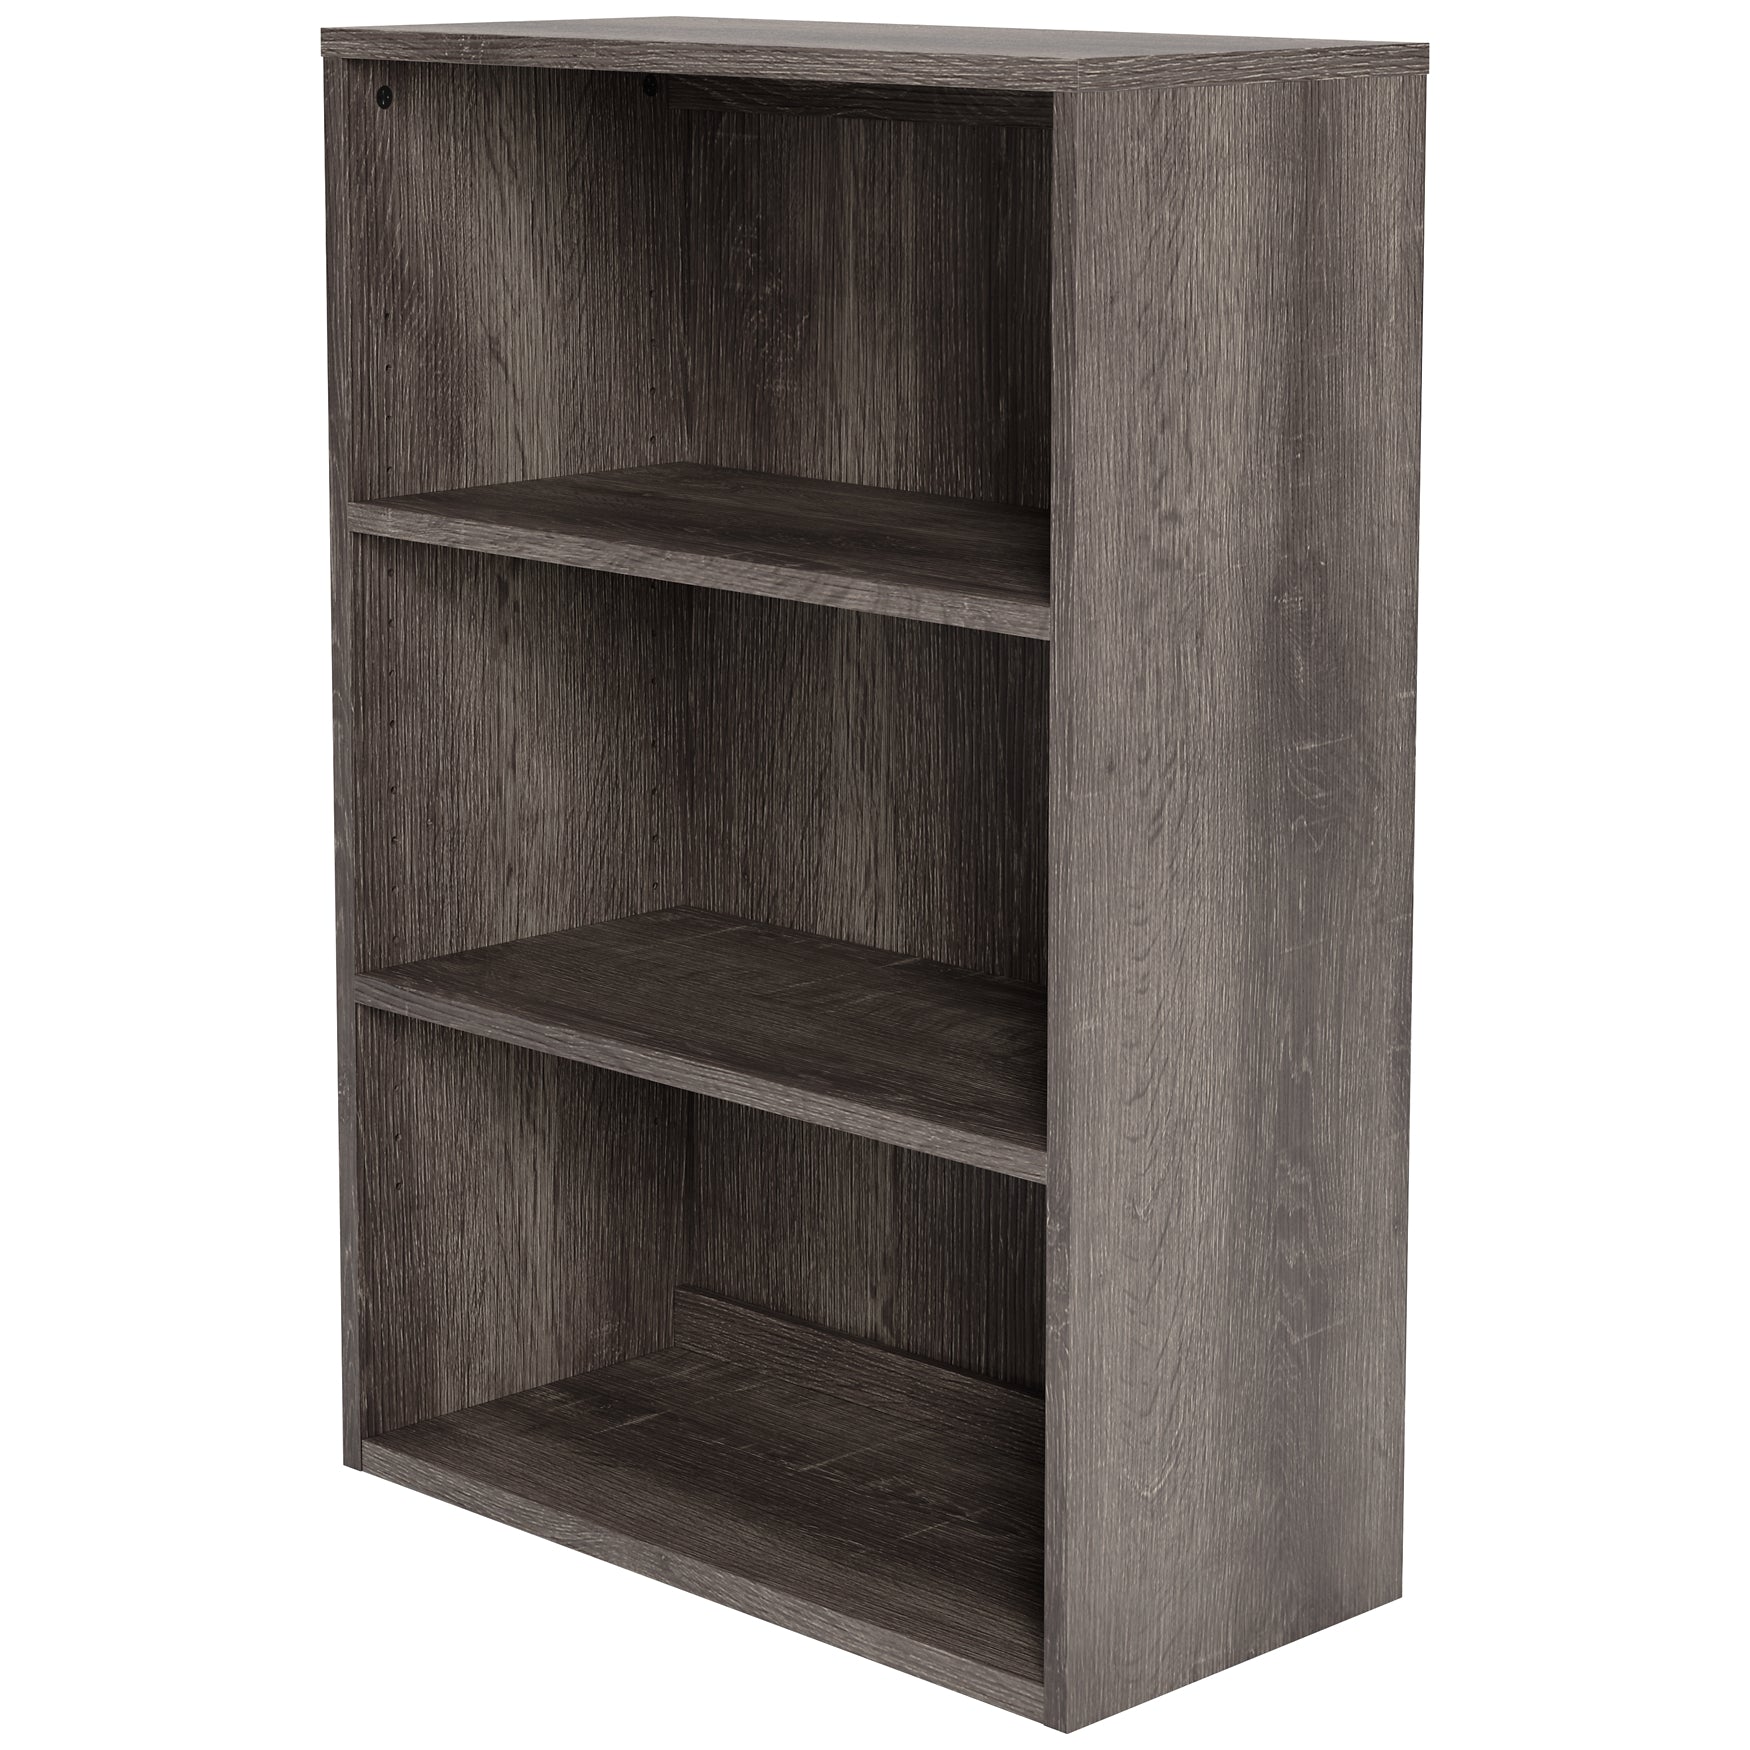 Arlenbry Medium Bookcase